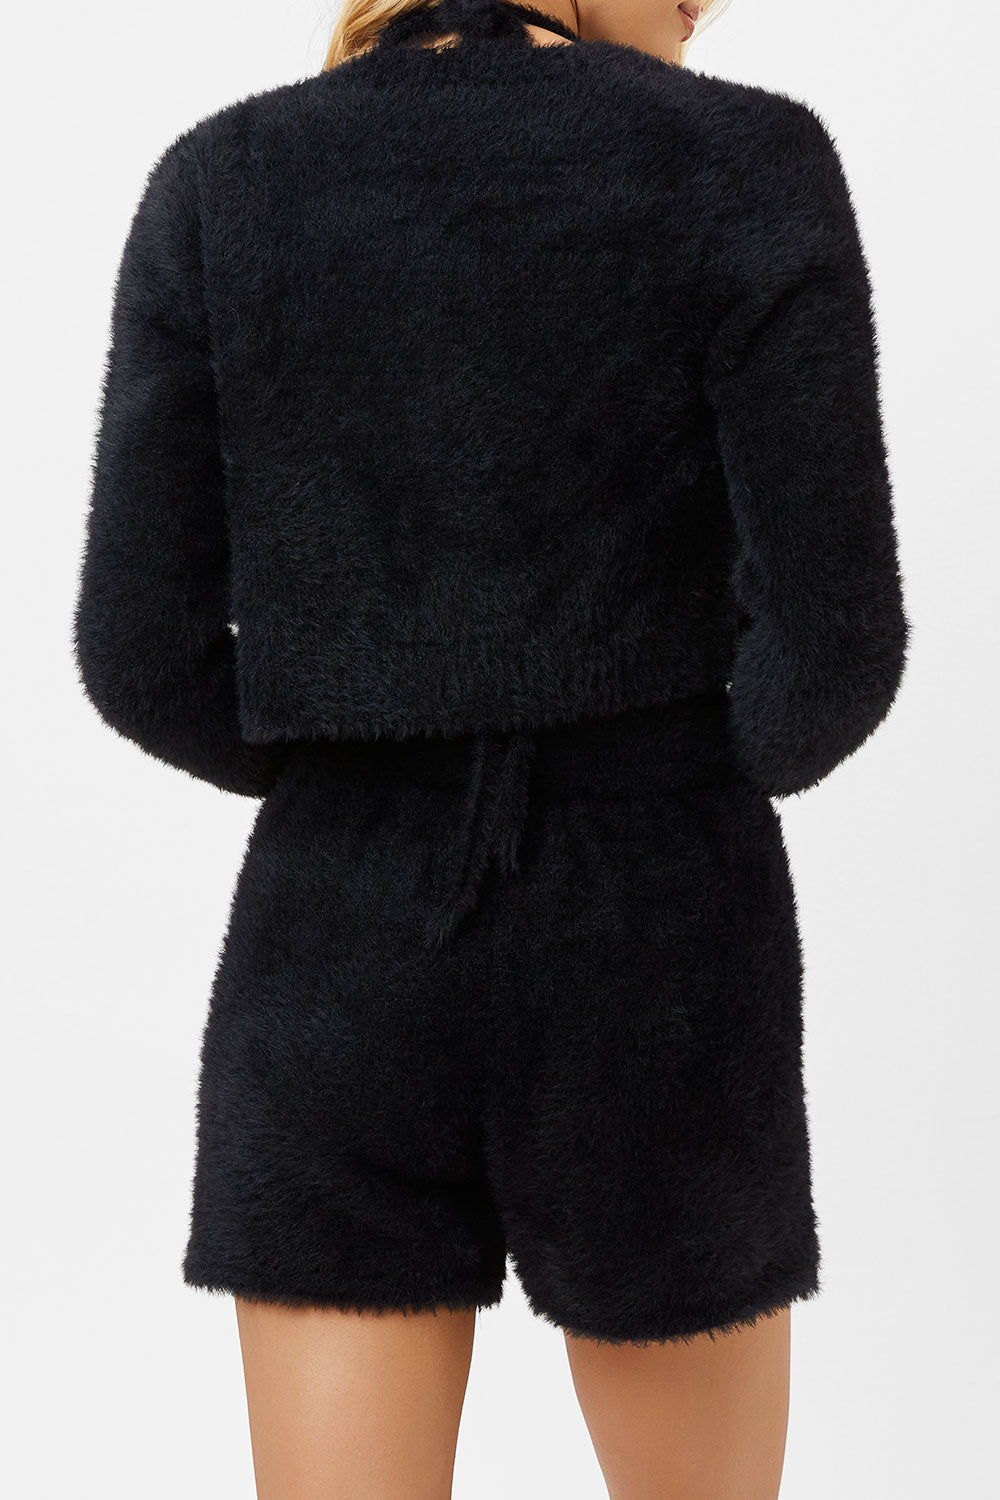 Cheri Fuzzy Cardigan Sweater - Black